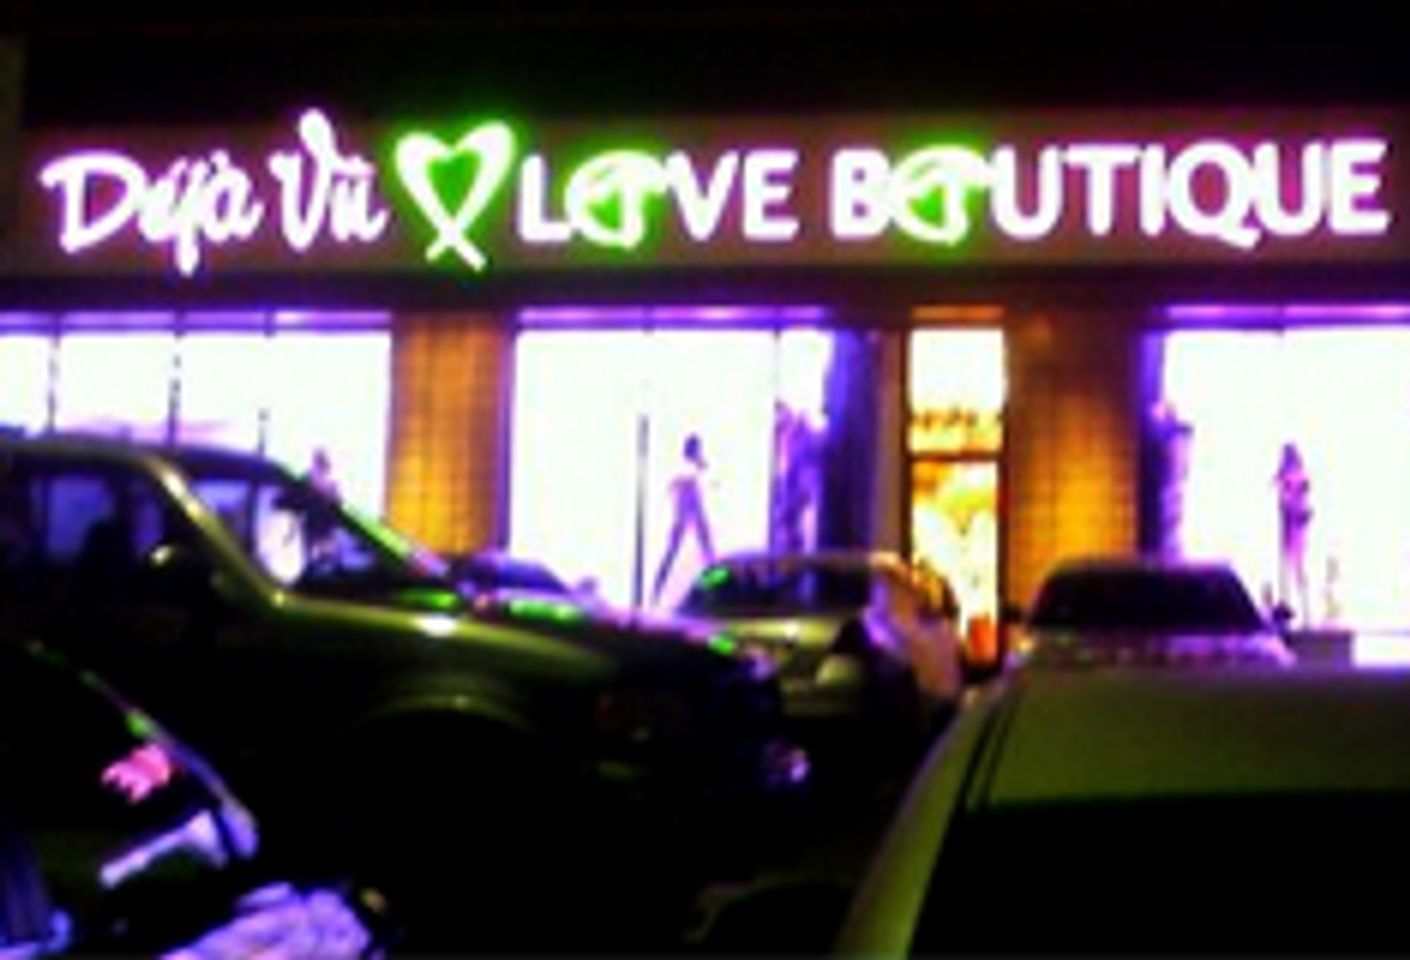 Deja Vu Love Boutique Sues City of Industry